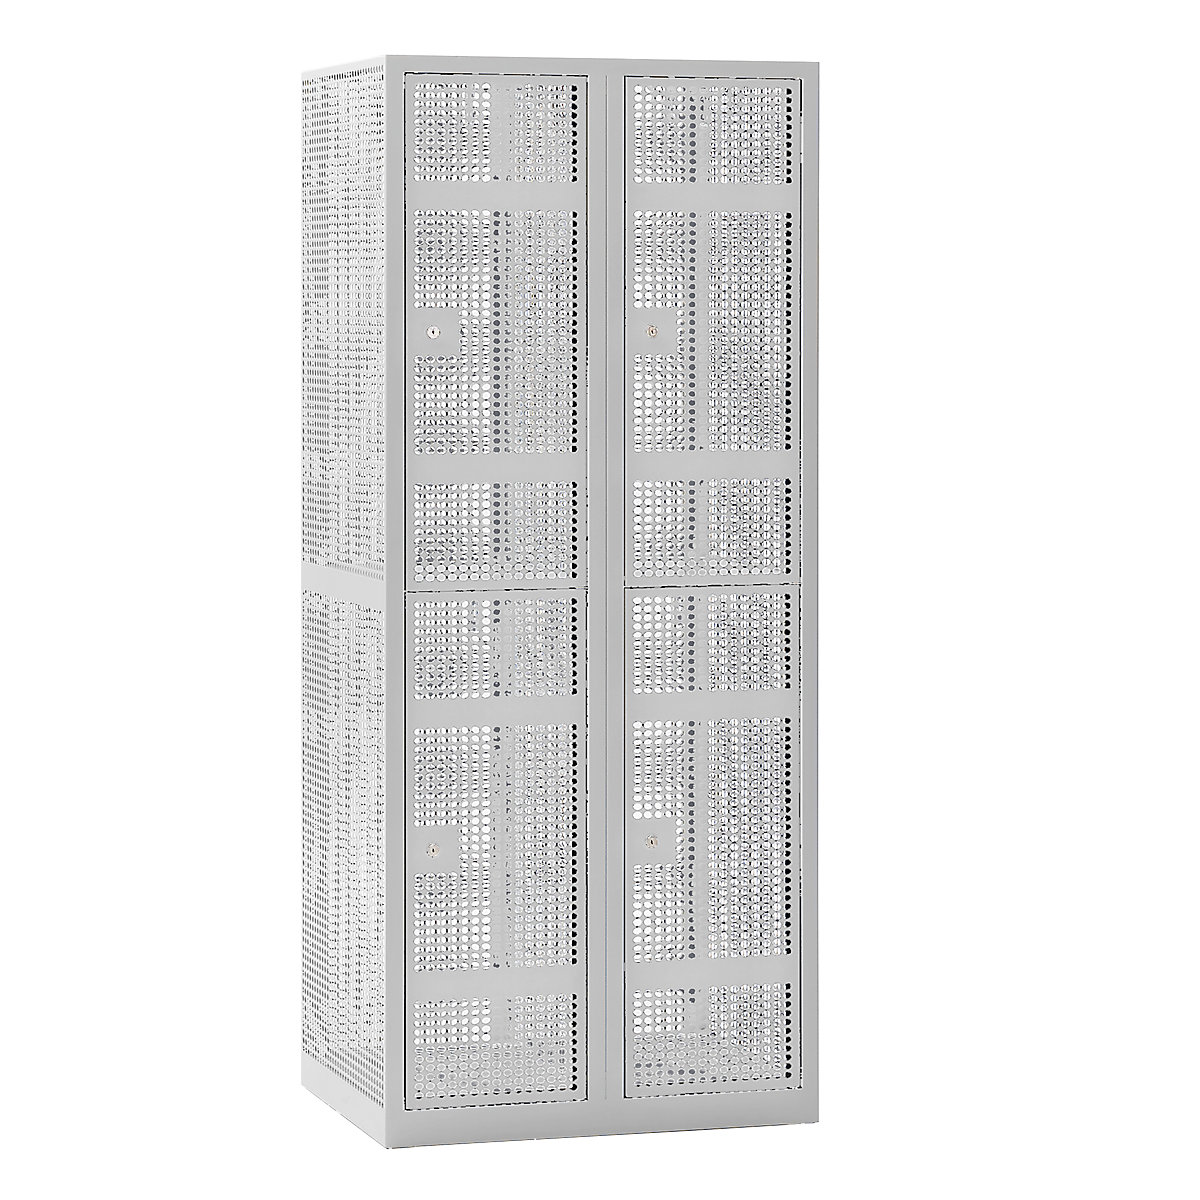 AMSTERDAM perforated sheet steel locker, width 800 mm – eurokraft pro, compartment 400 mm, 4 compartments, cylinder lock, light grey doors